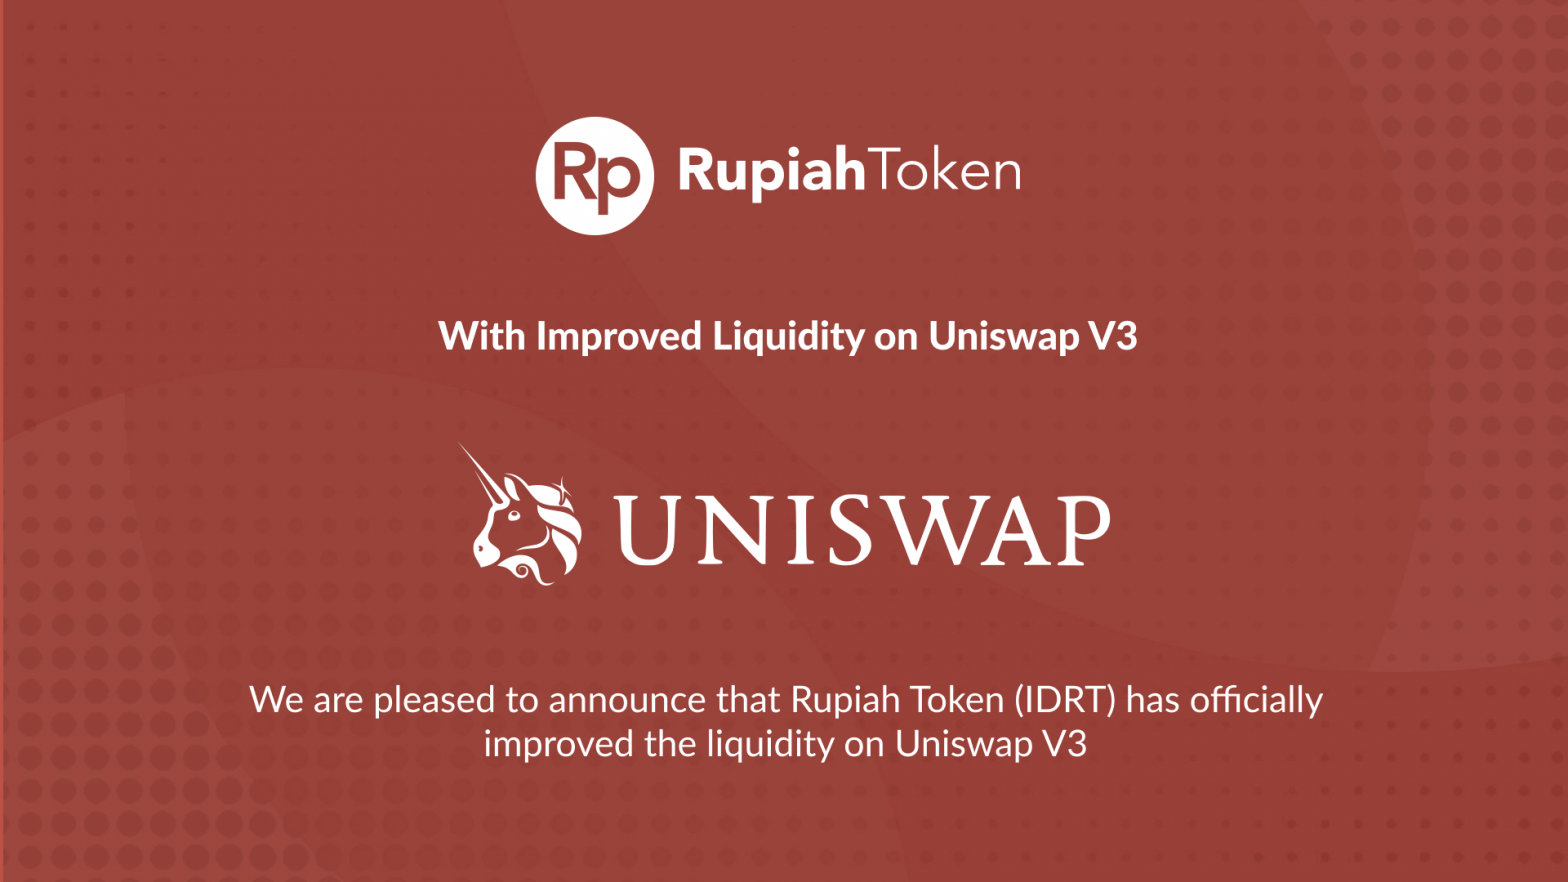 IDRT UniSwap V3 Rupiah Token